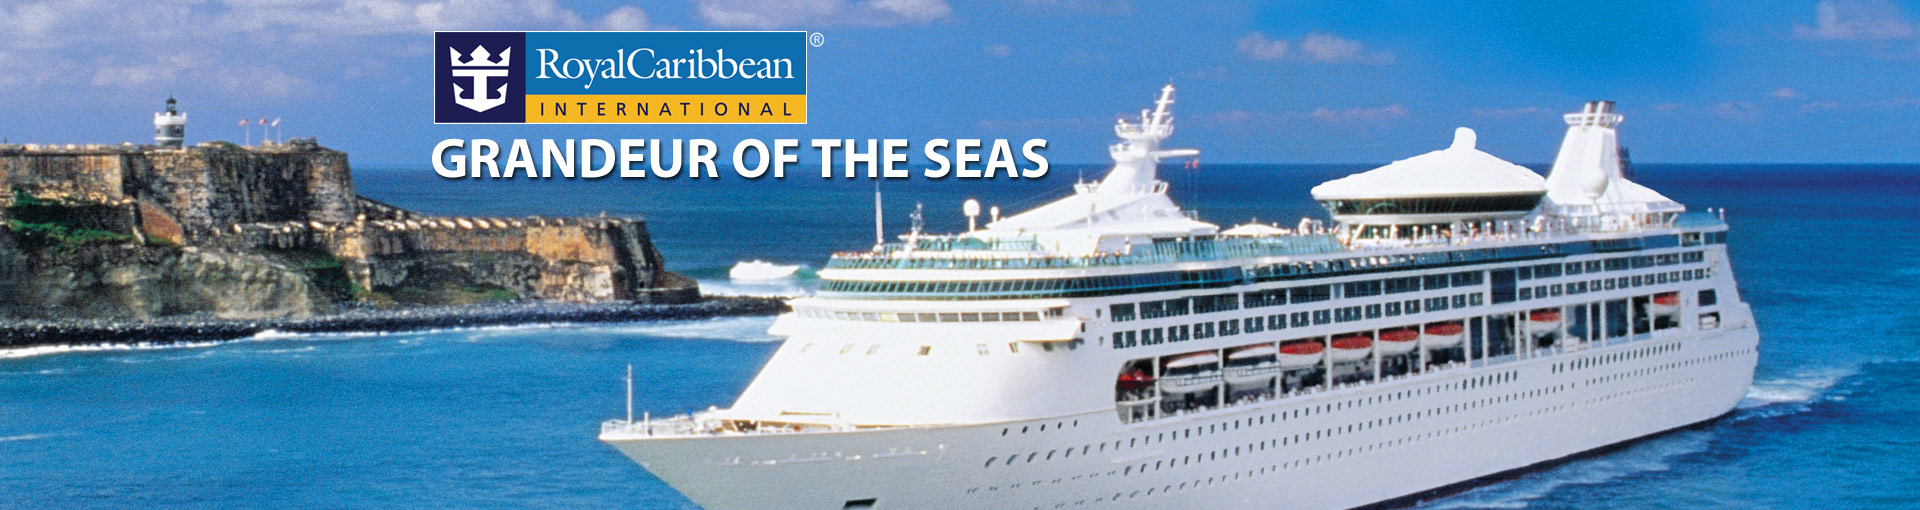 Royal Caribbean's Grandeur of the Seas Cruise Ship, 2019, 2020 and 2021